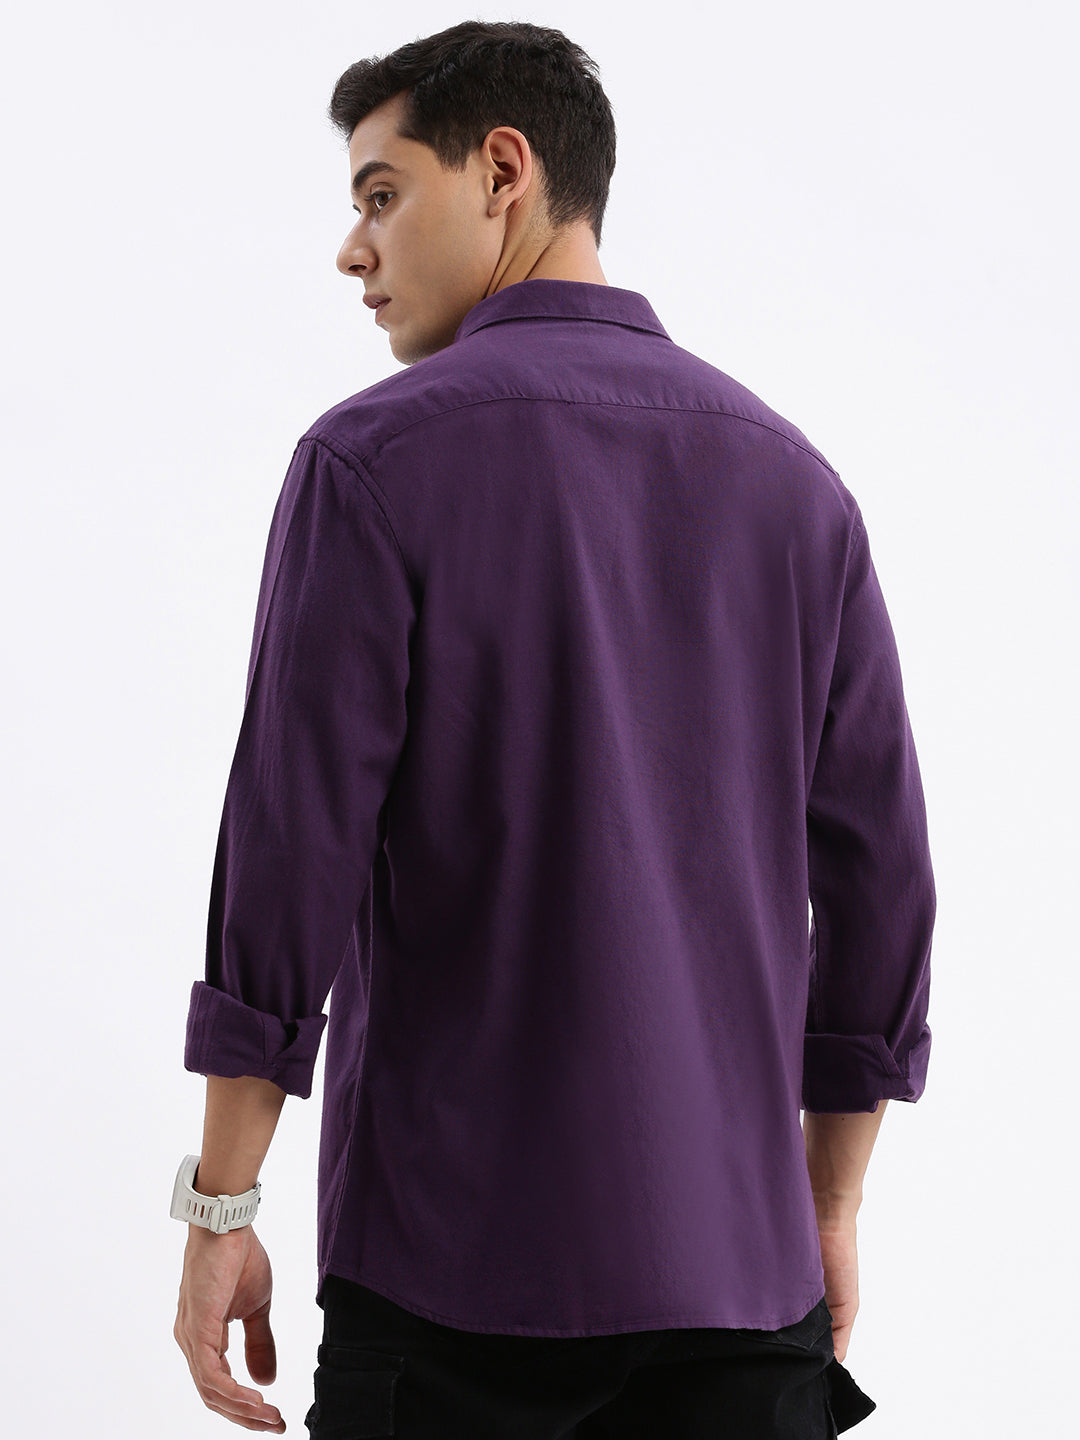 Men Spread Collar Solid Slim Fit Purple Shirt